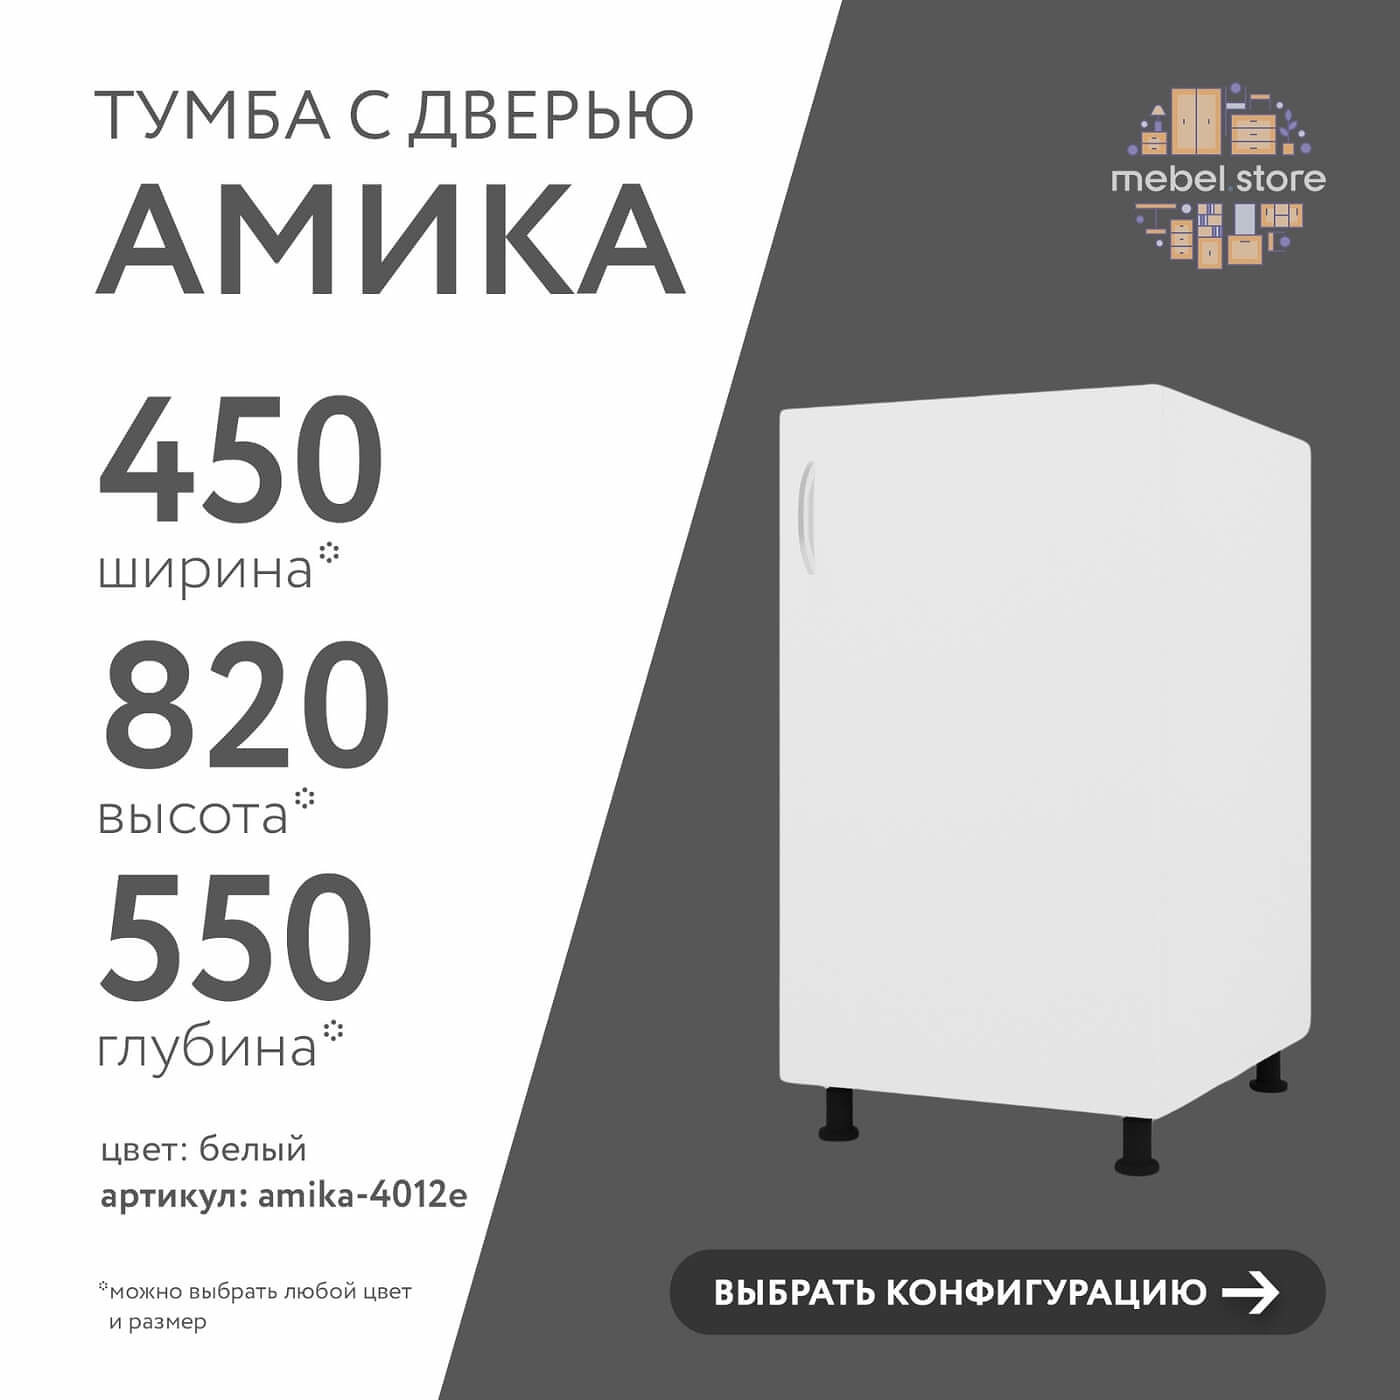 Тумба напольная Амика-4012e минимализм для кухни - фото 1 large